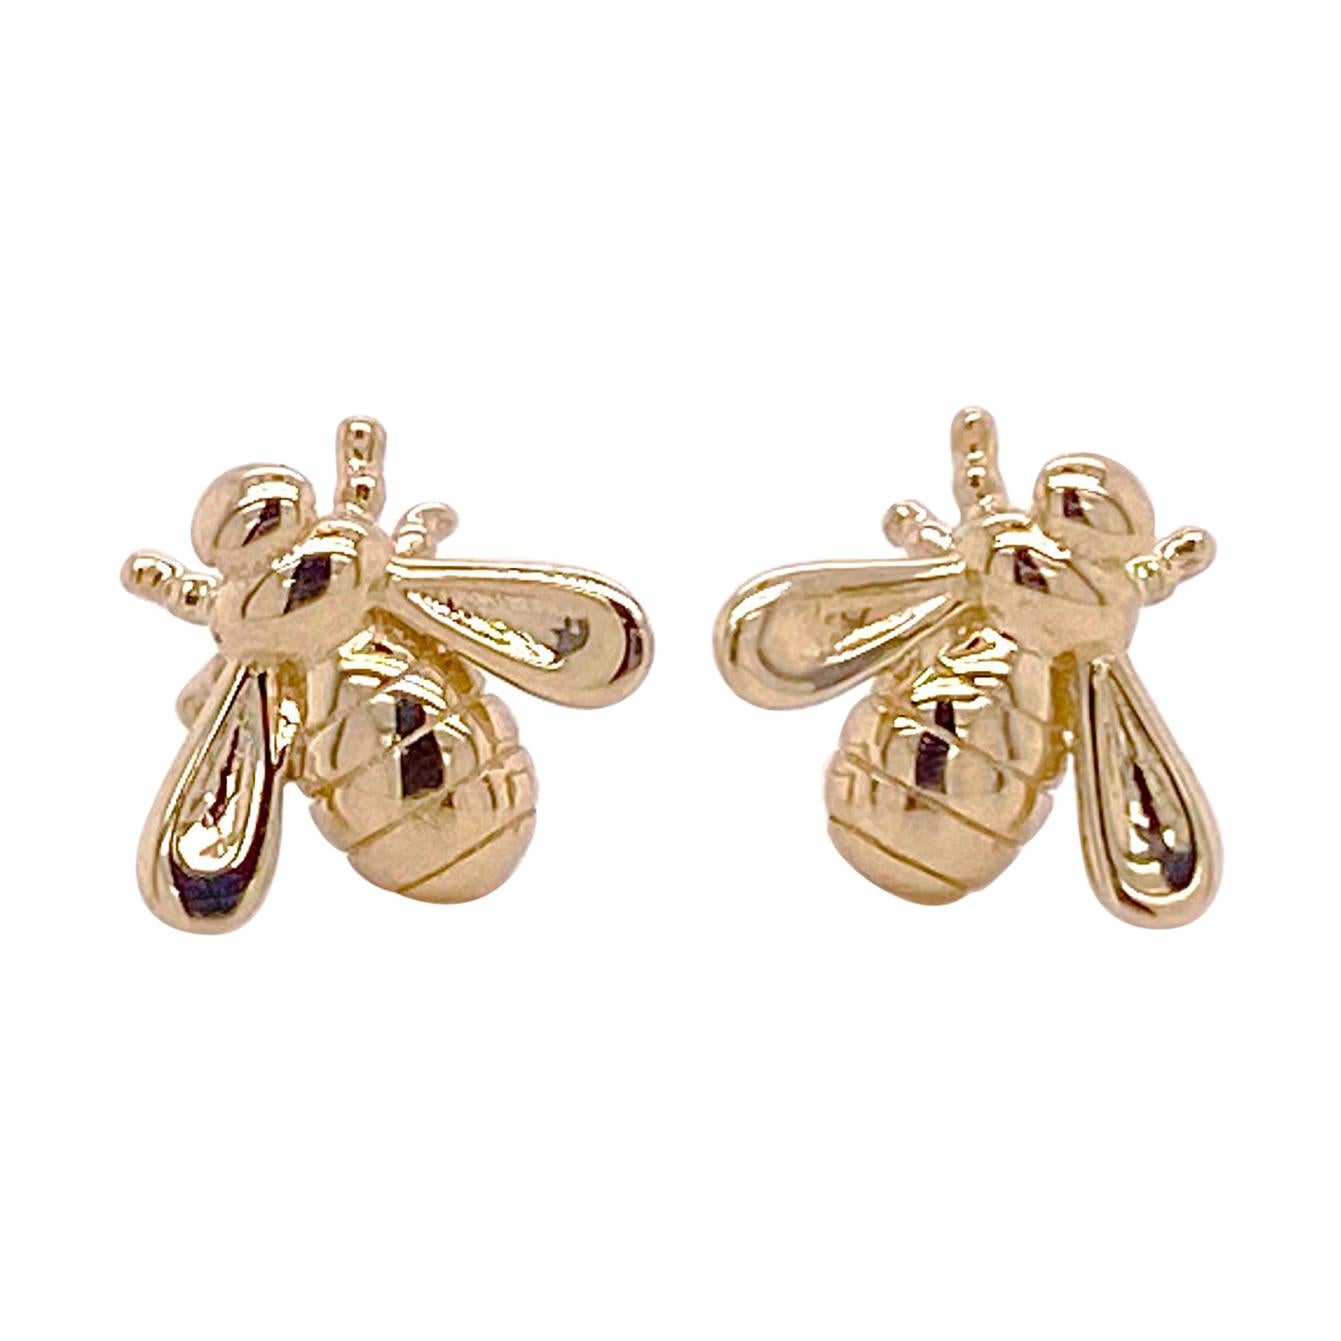 Bumble Bee Earrings, Honeybee Stud Earrings, Yellow Gold, Nature Inspired